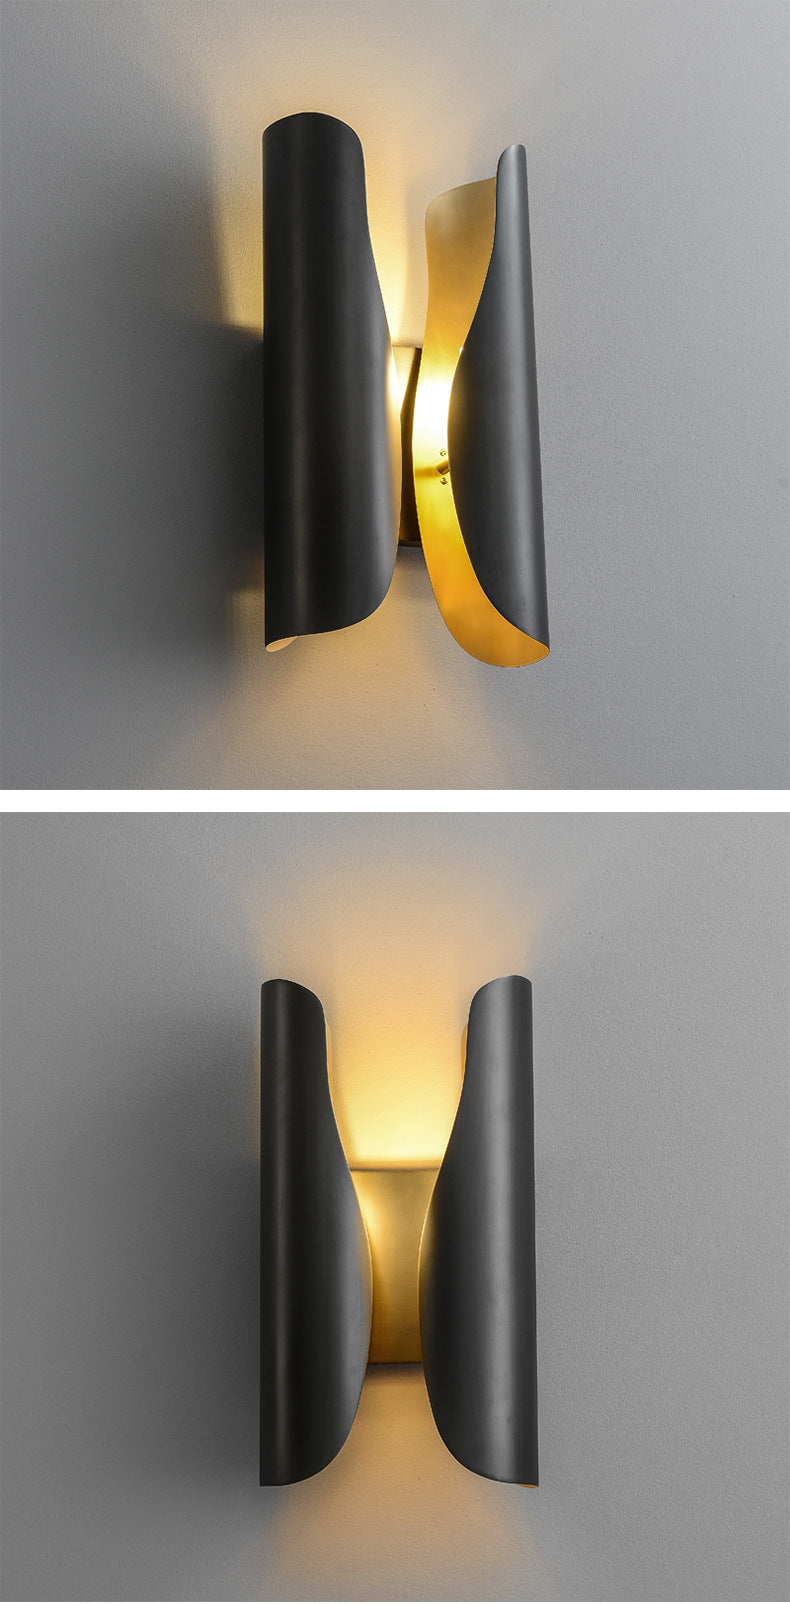 H-shaped Gold Wall Lamp